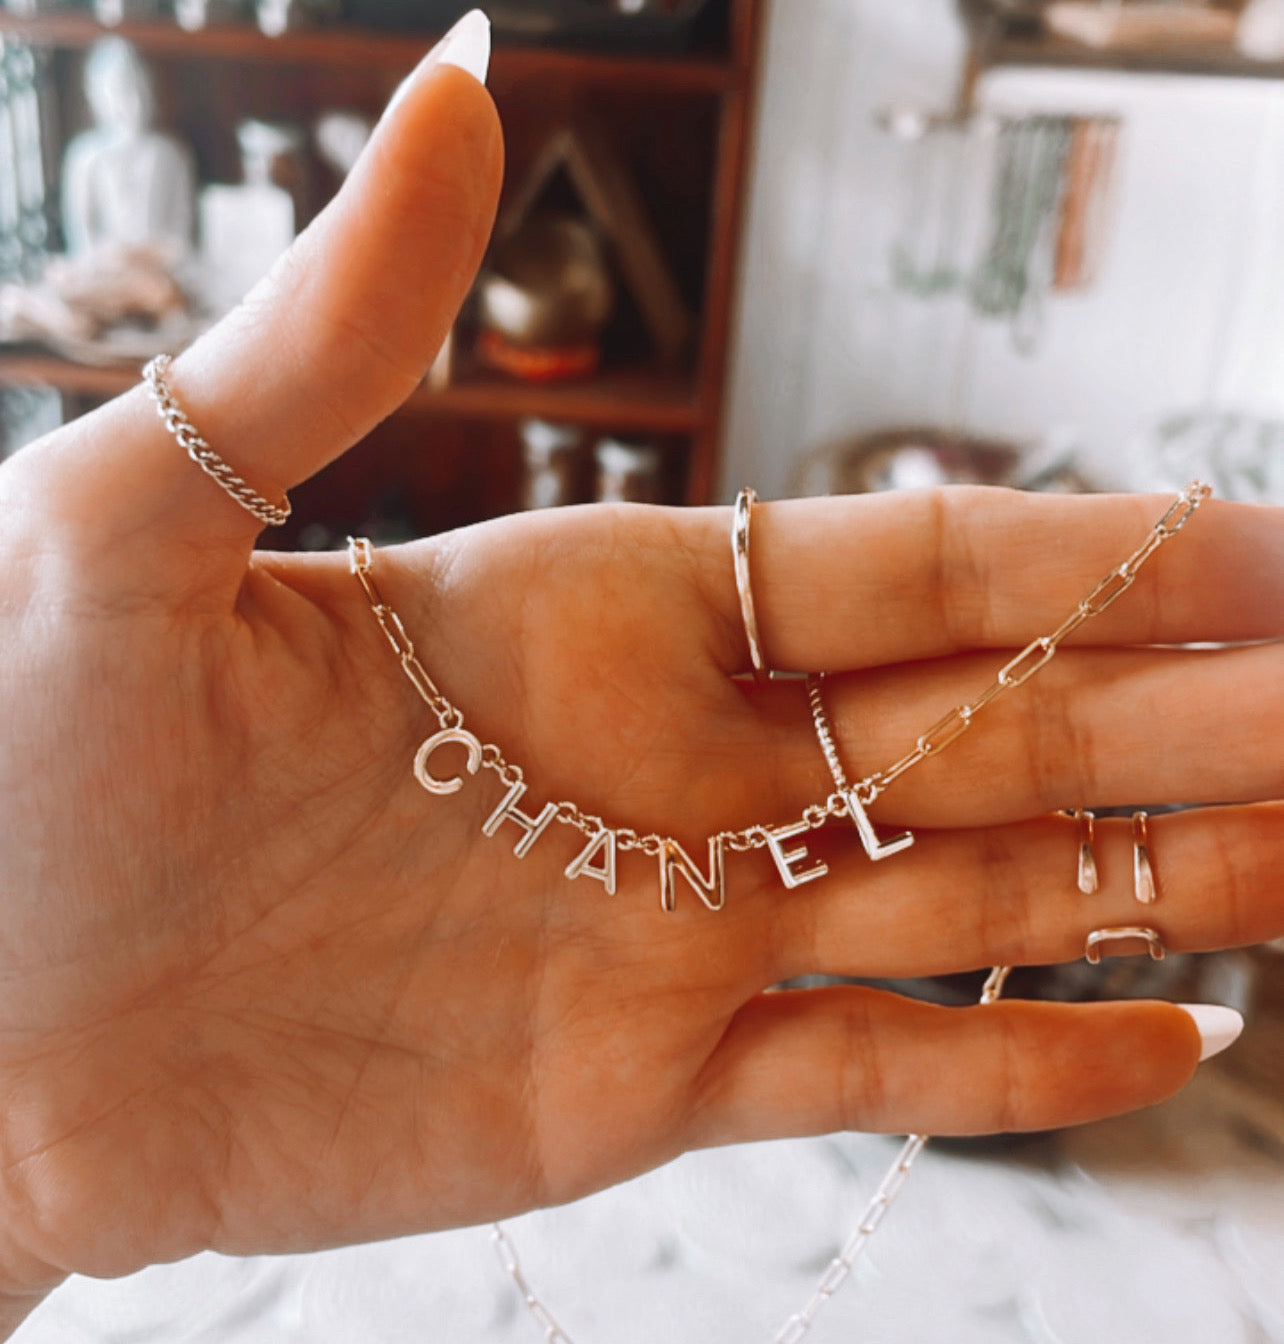 Chanel 14K Gold Filled Necklace